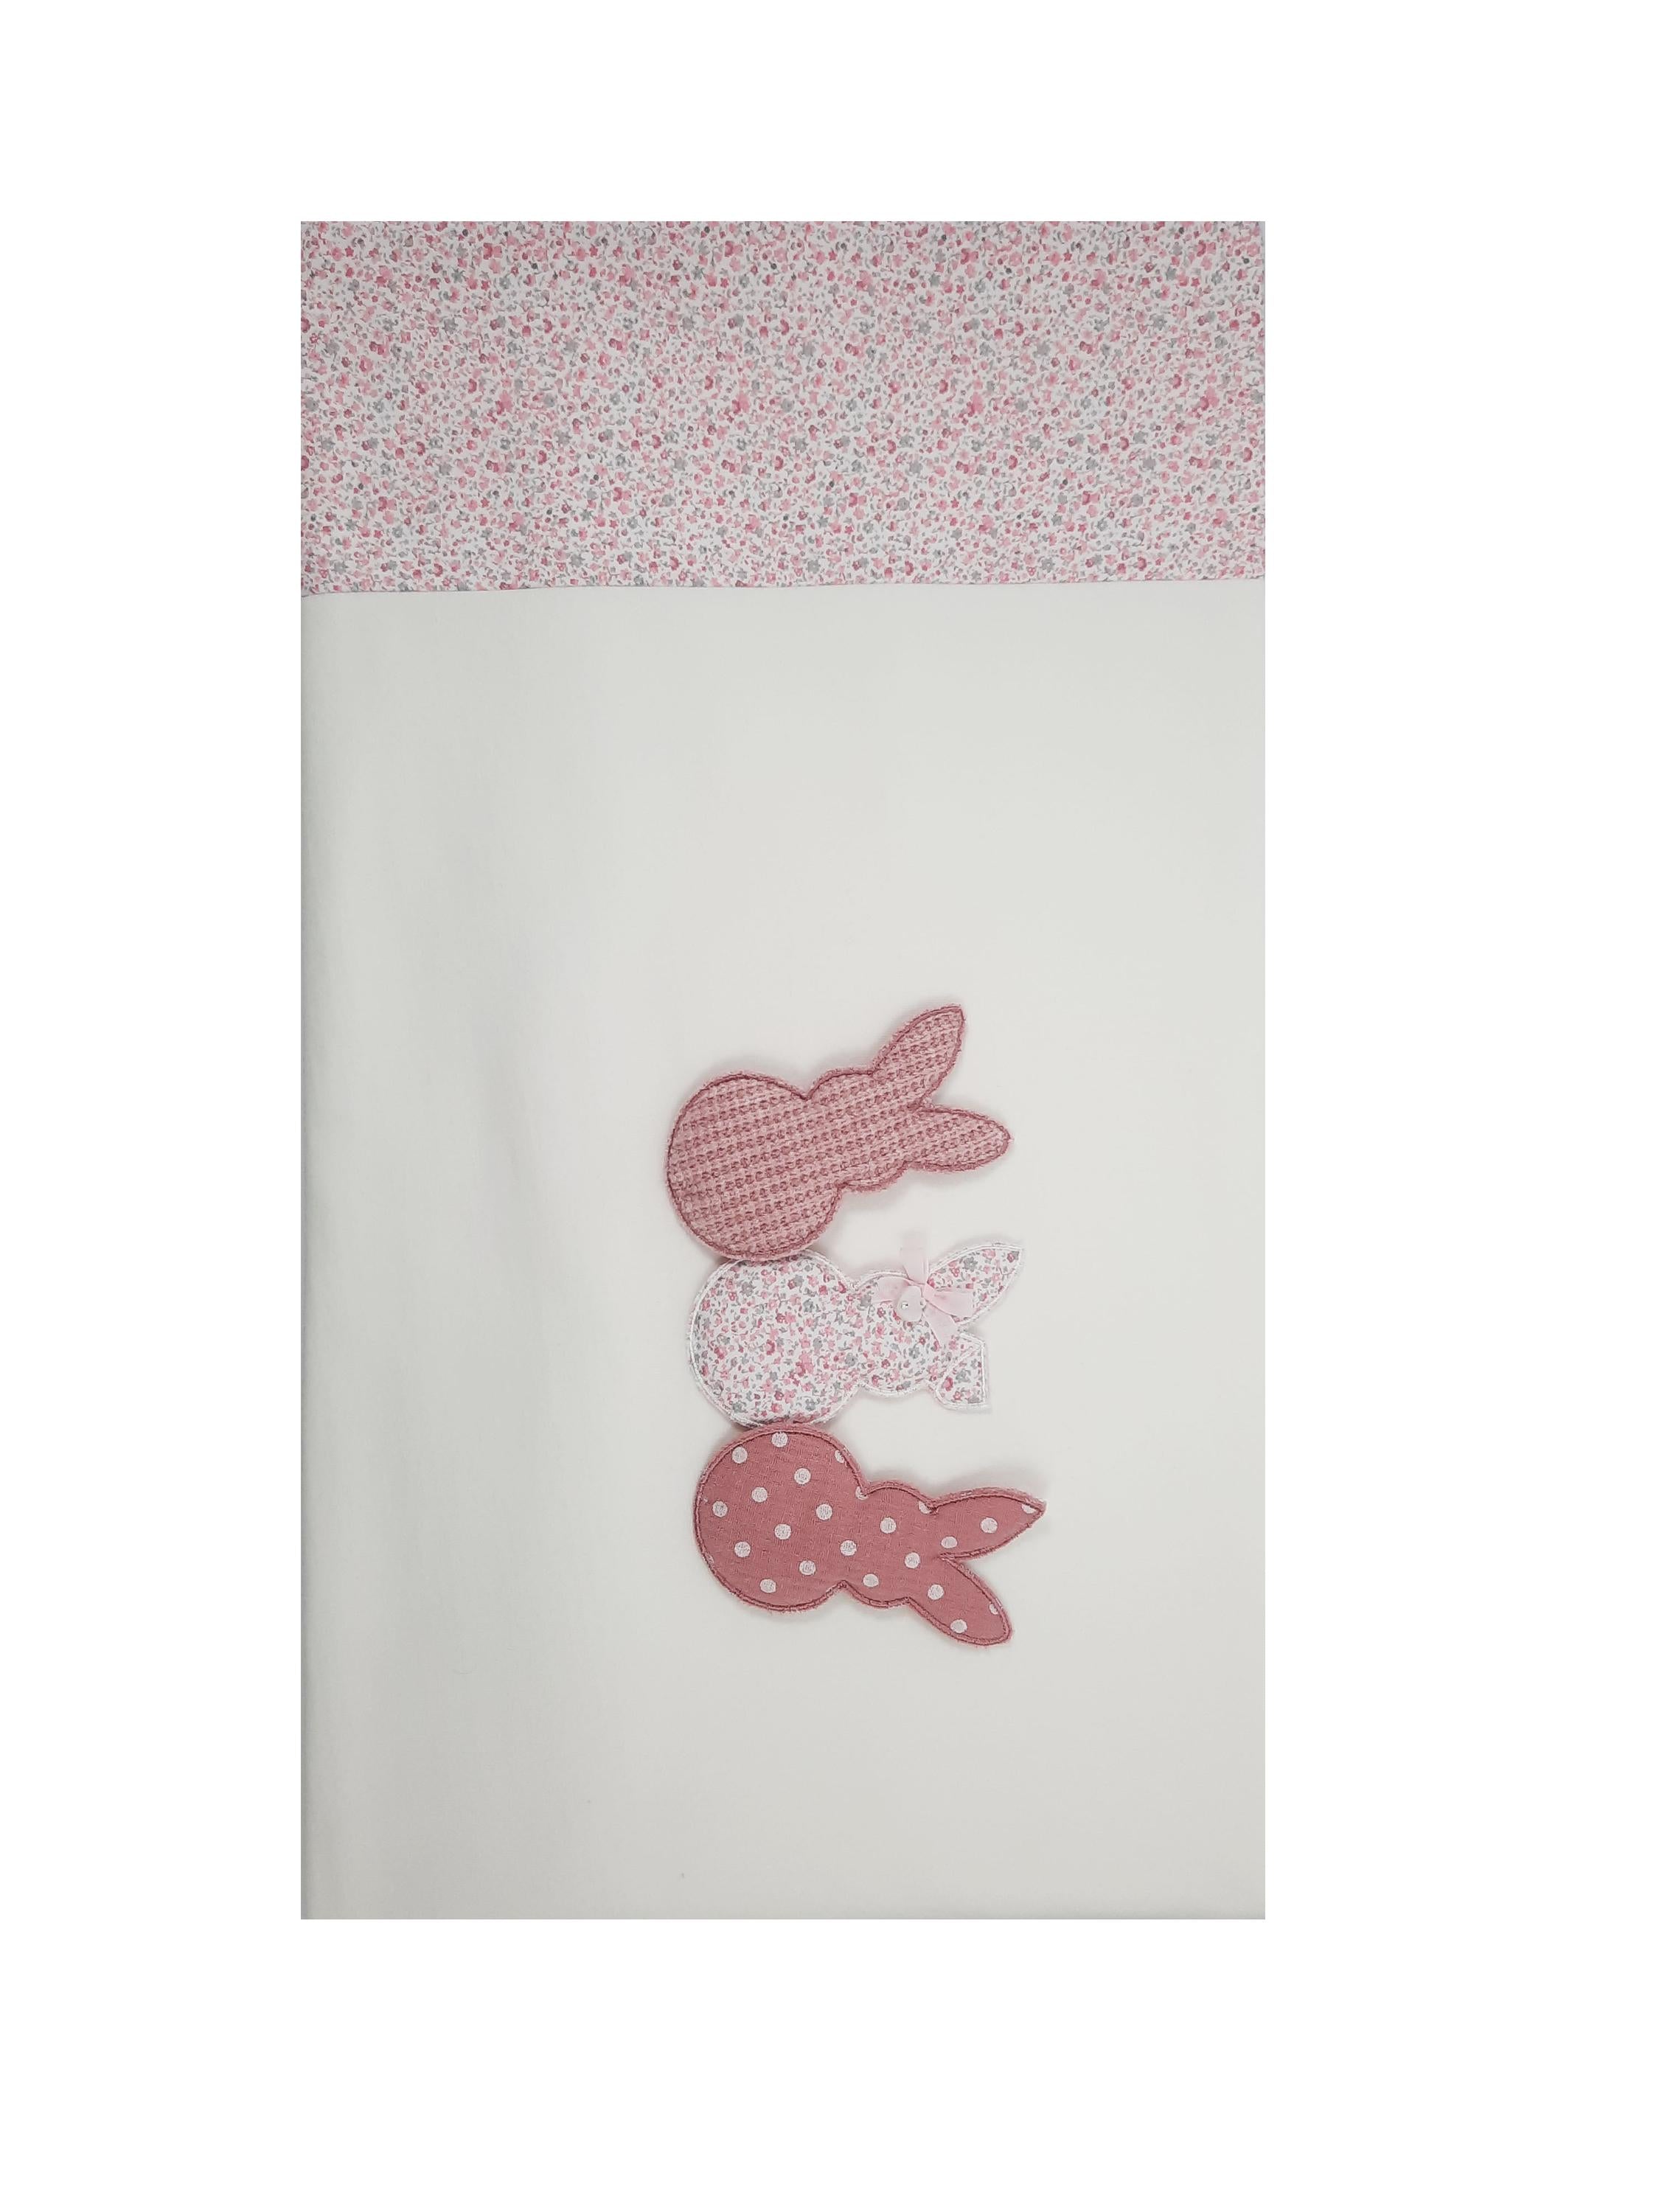 Coperta Imbottita Sfoderabile In Caldo Cotone Panna Rosa Neonata Tema Coniglietta NINNAOH I21COP18I - NINNAOH - LuxuryKids